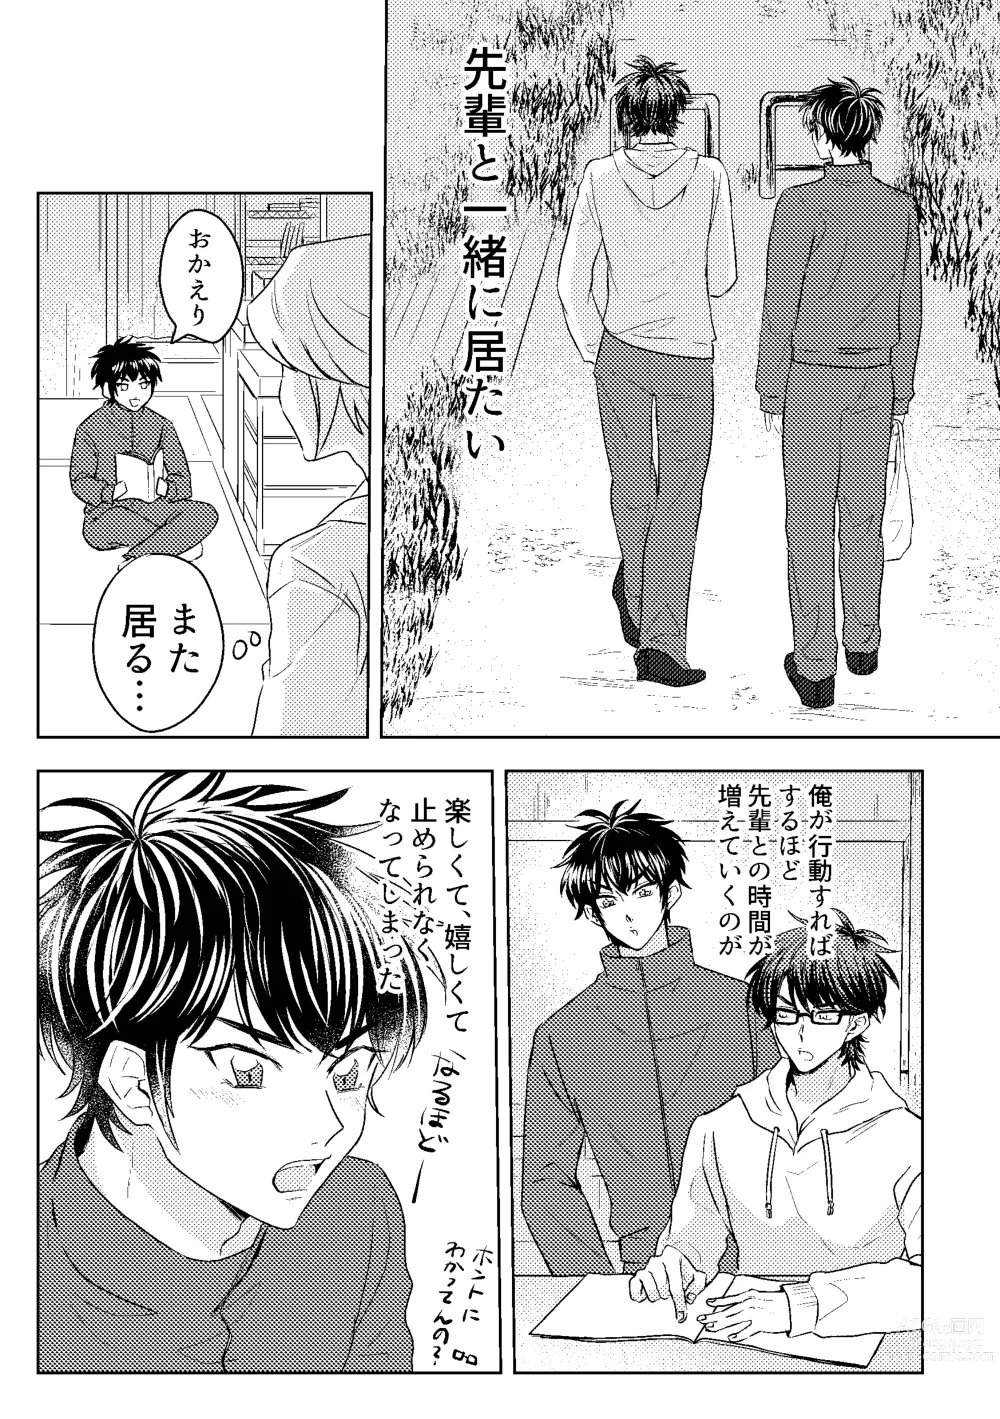 Page 13 of doujinshi Hatsukoi Sparkle